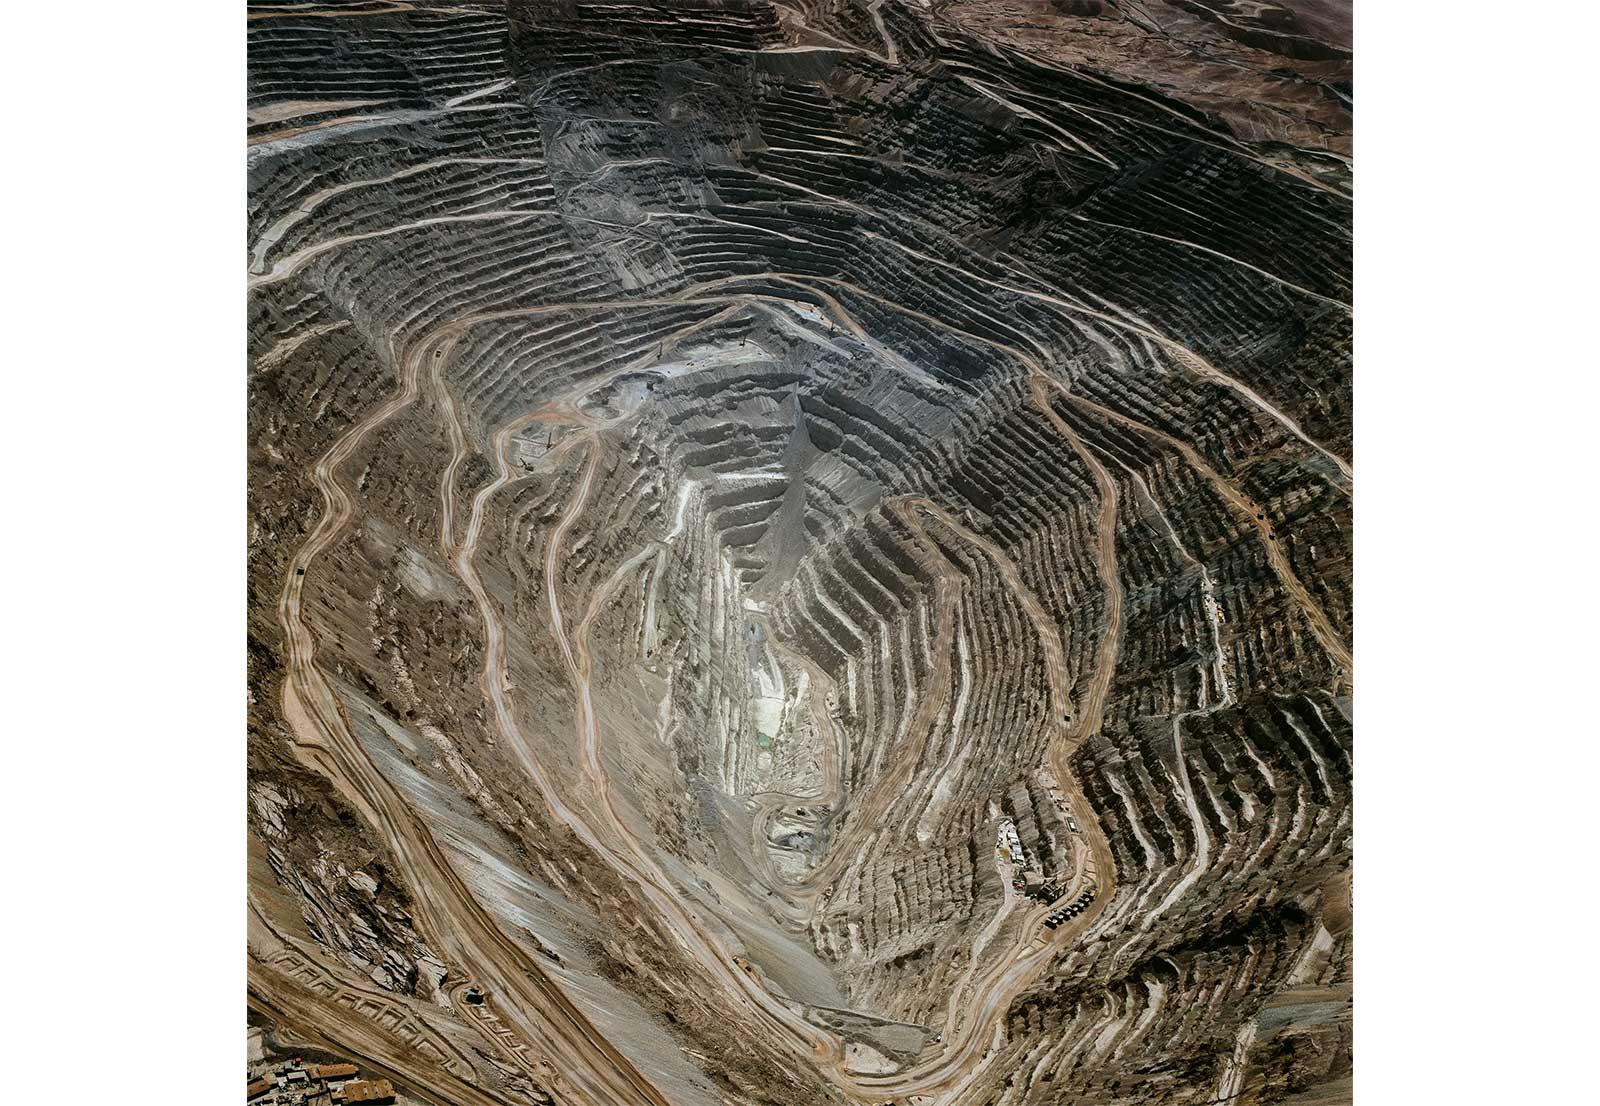 David Maisel, Copper Mine 1, Chuquicamata, Atacama, Chile, 2018. 